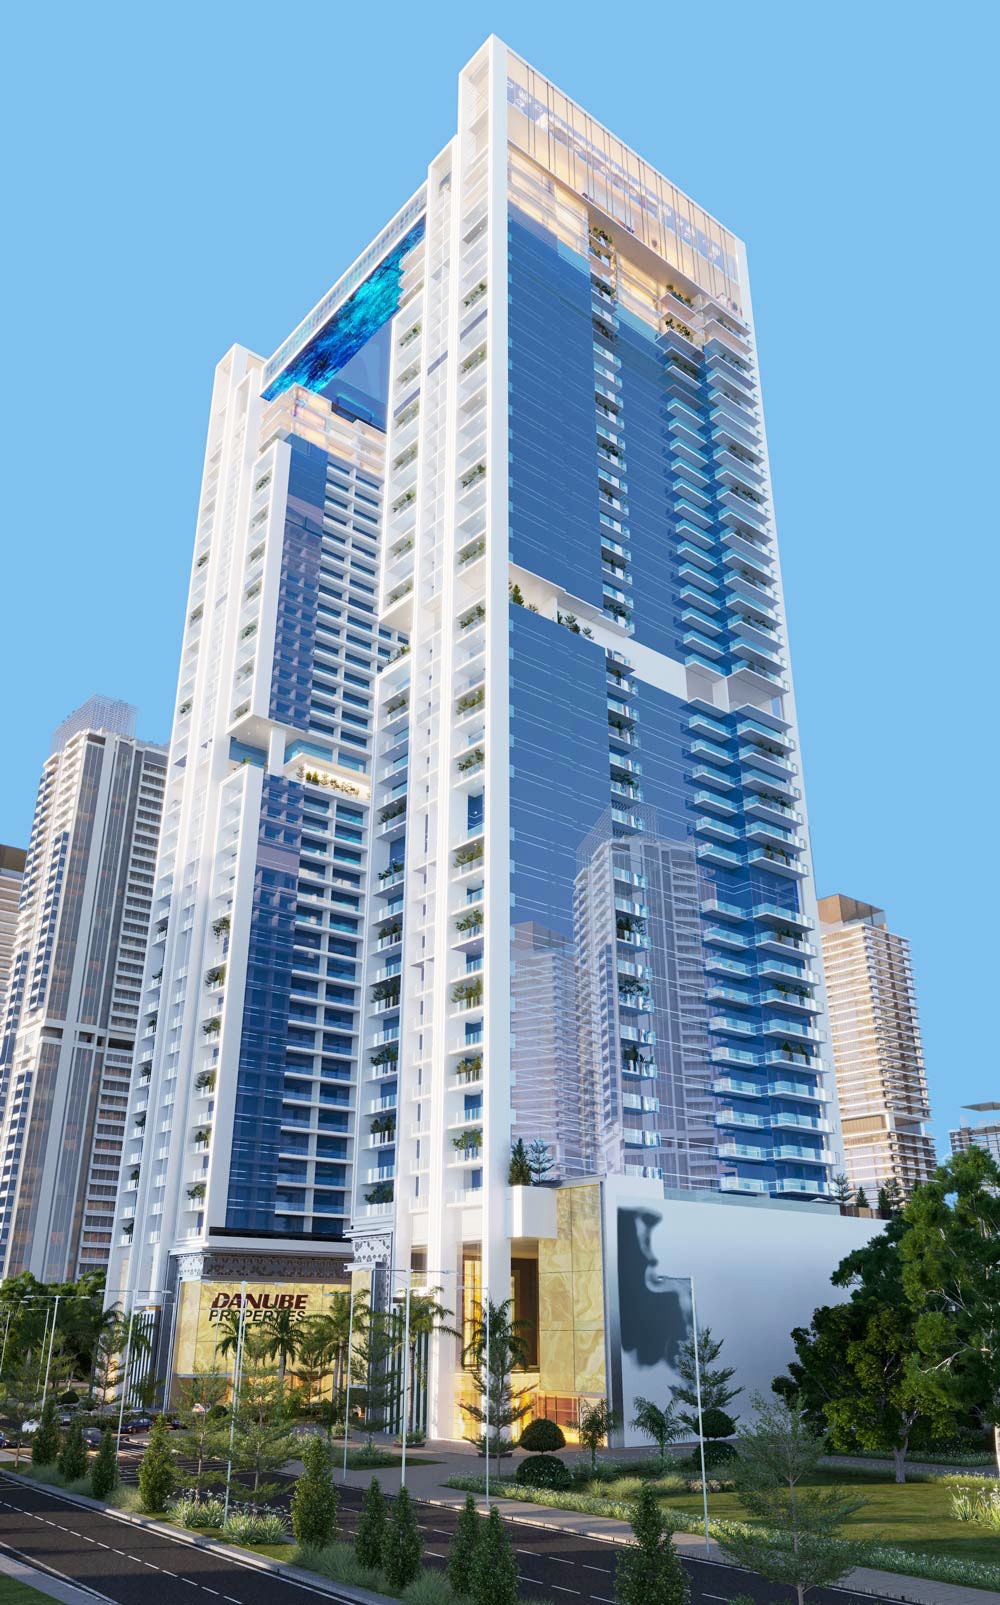 Danube Viewz Apartments in Dubai, Jumeirah Lake Towers (JLT) Designed by Aston Martin